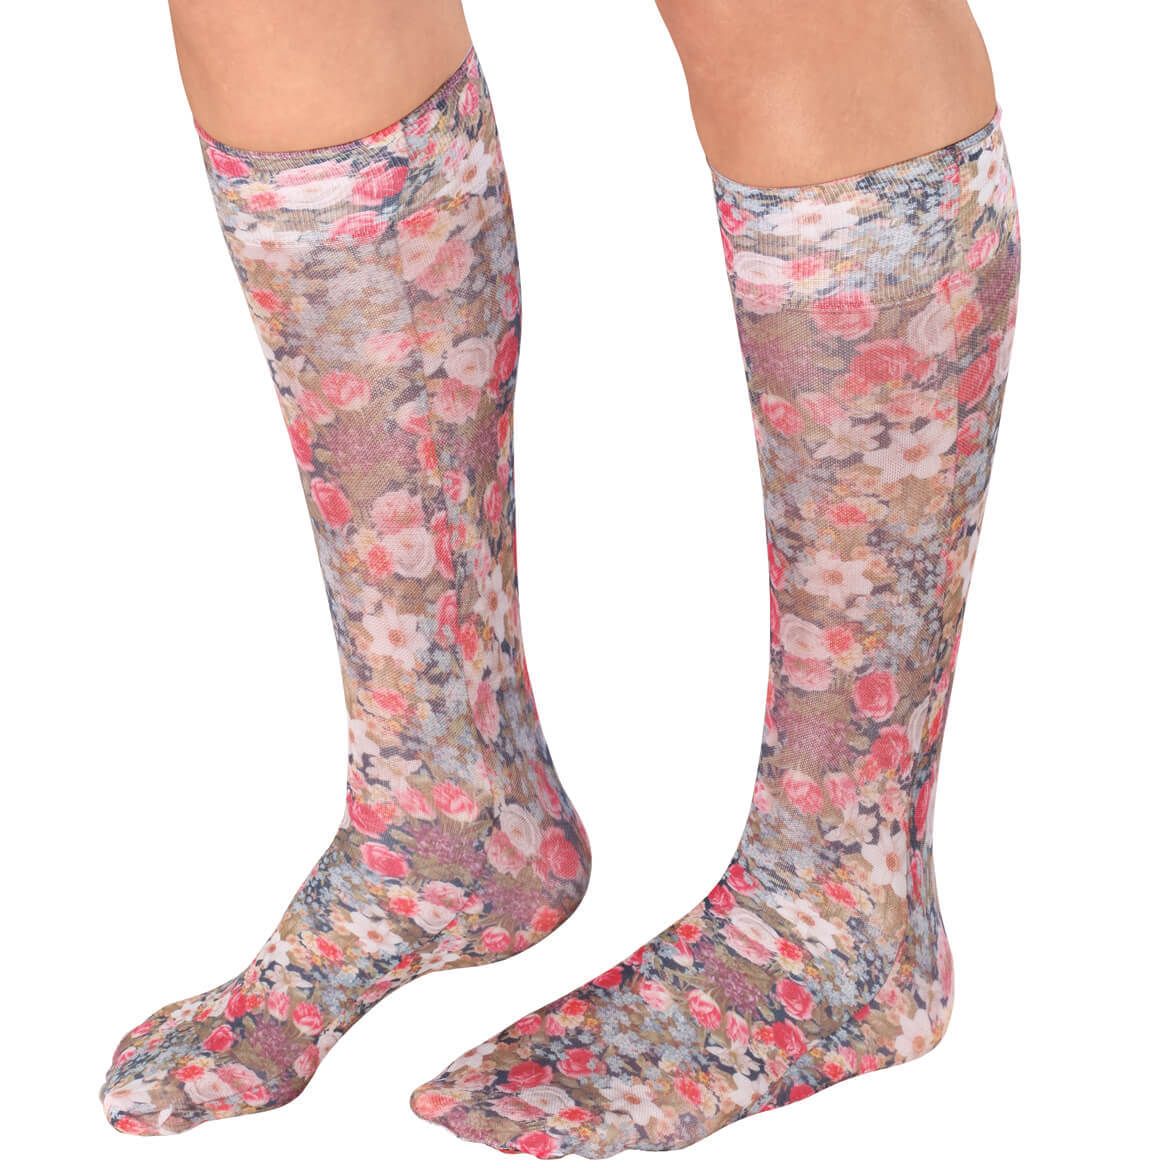 Celeste Stein Compression Socks, 15-20 mmHg + '-' + 352878